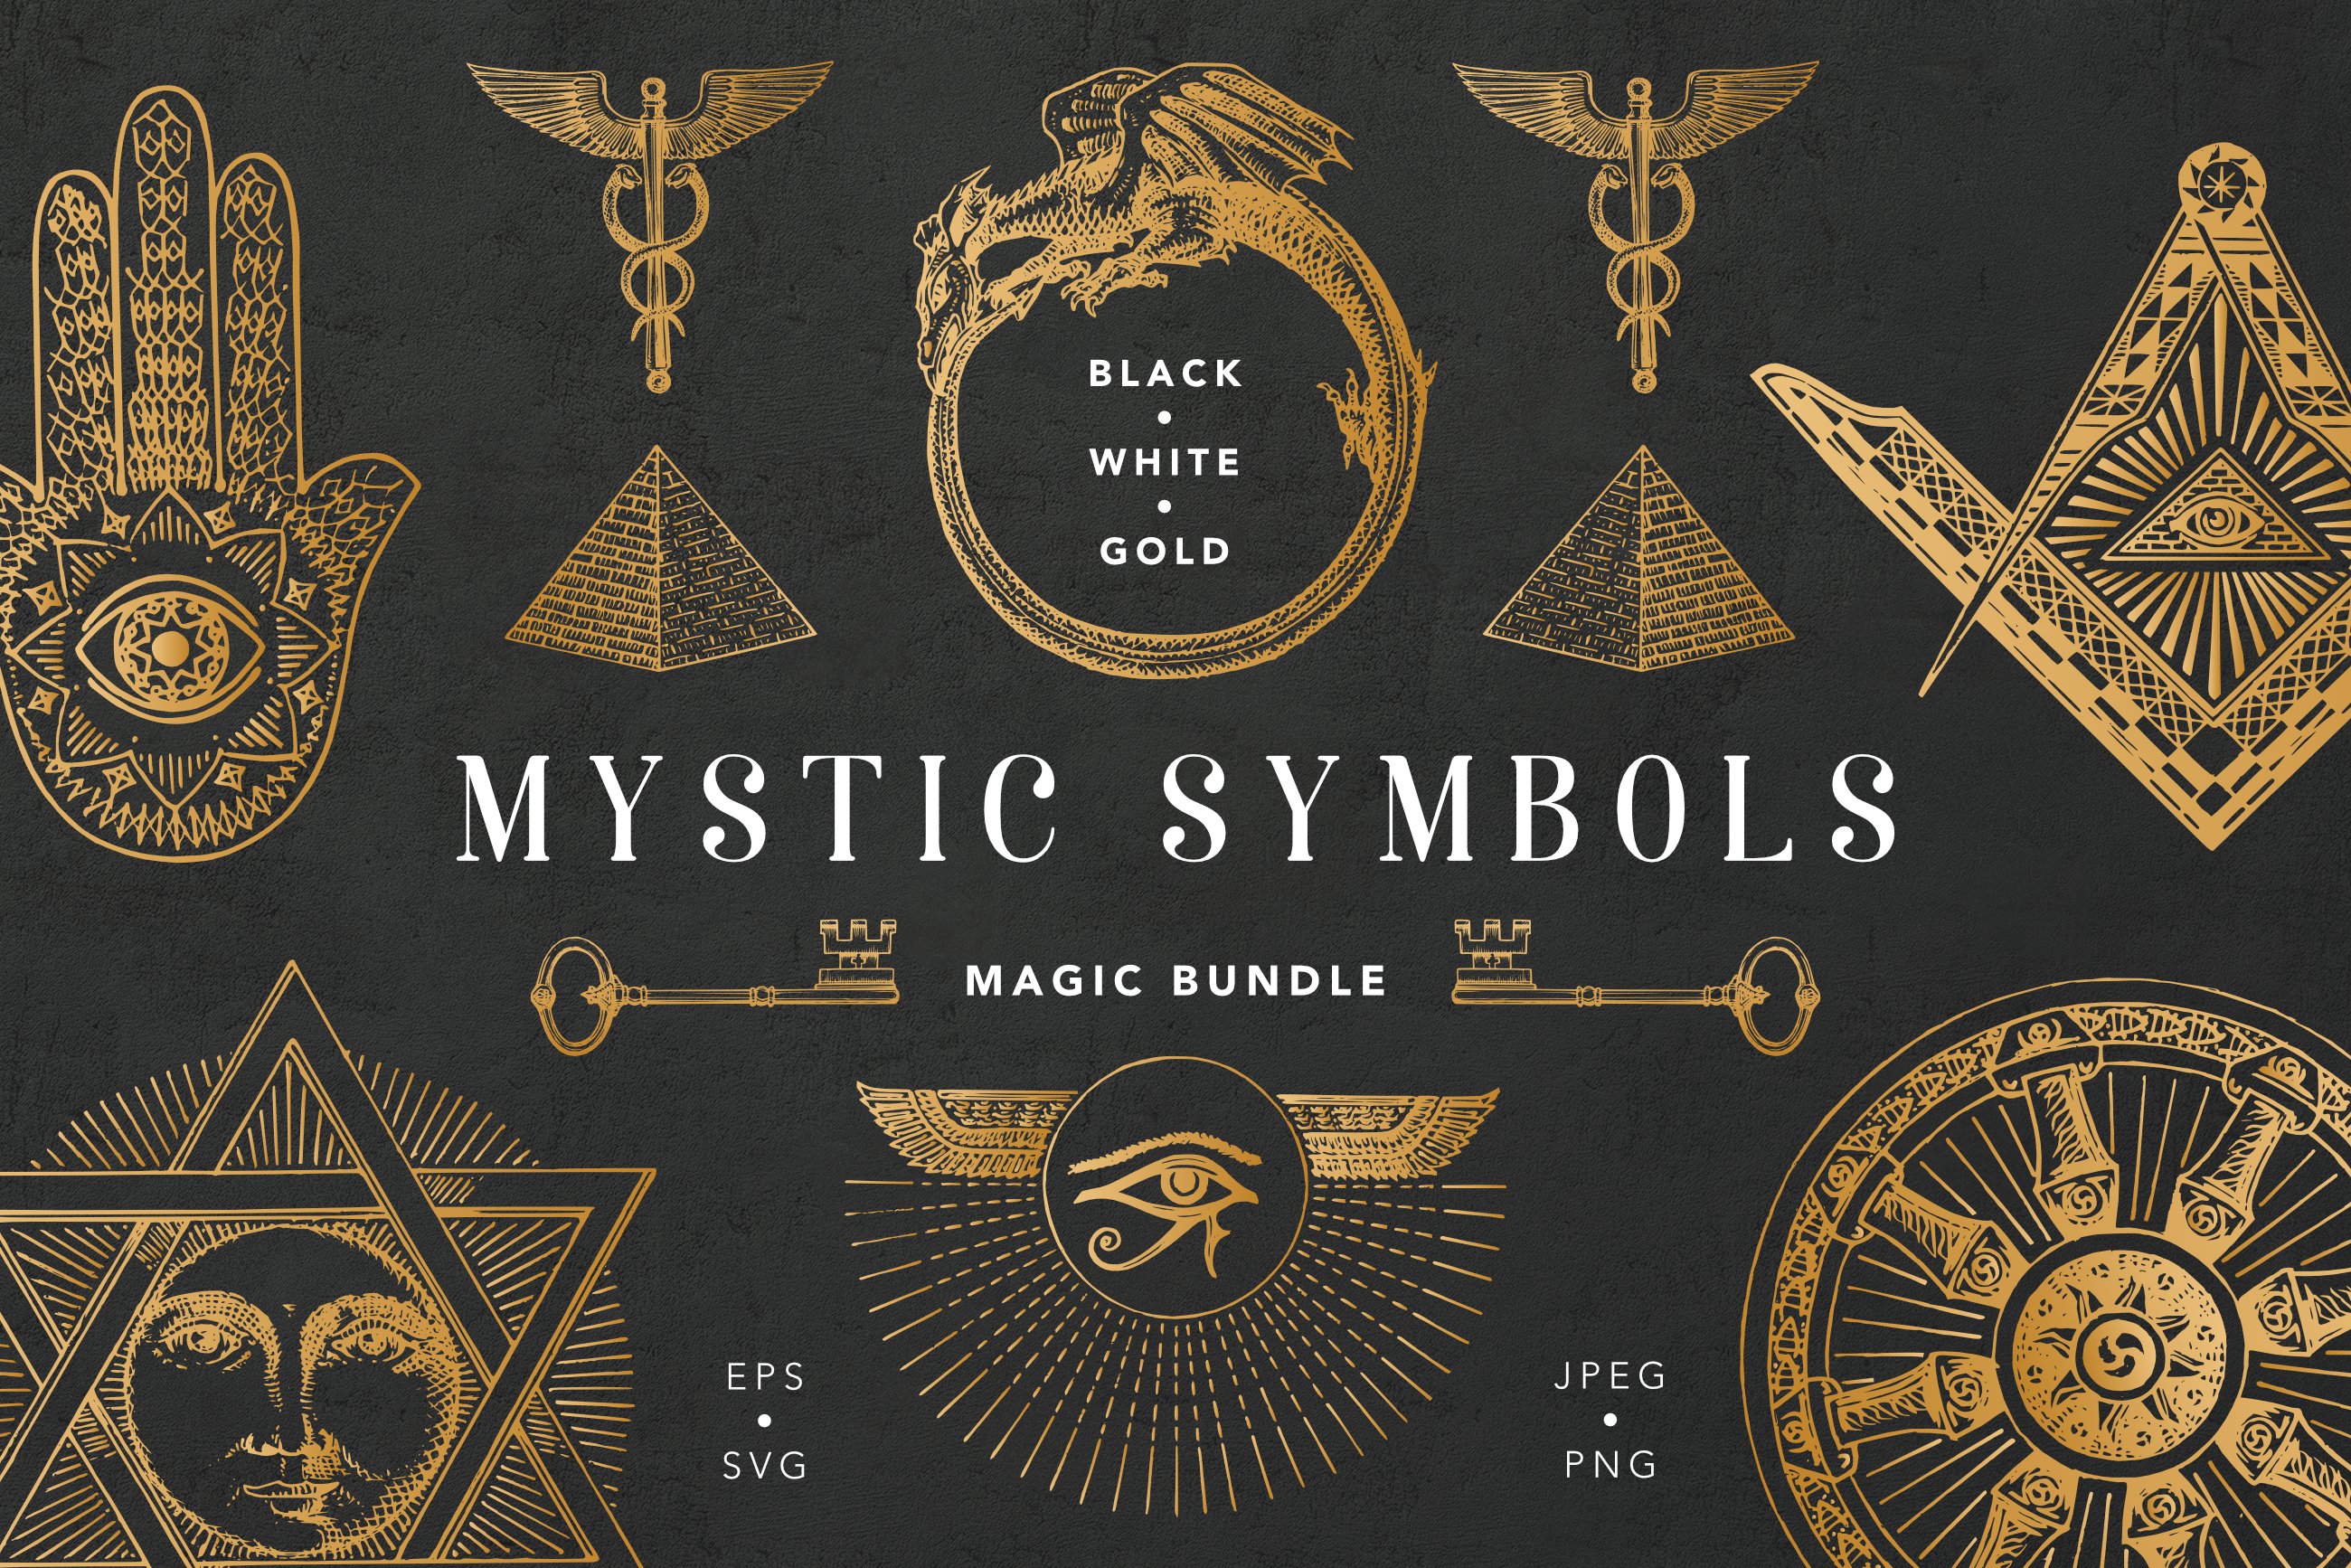 MYSTIC SYMBOLS magic collection cover image.